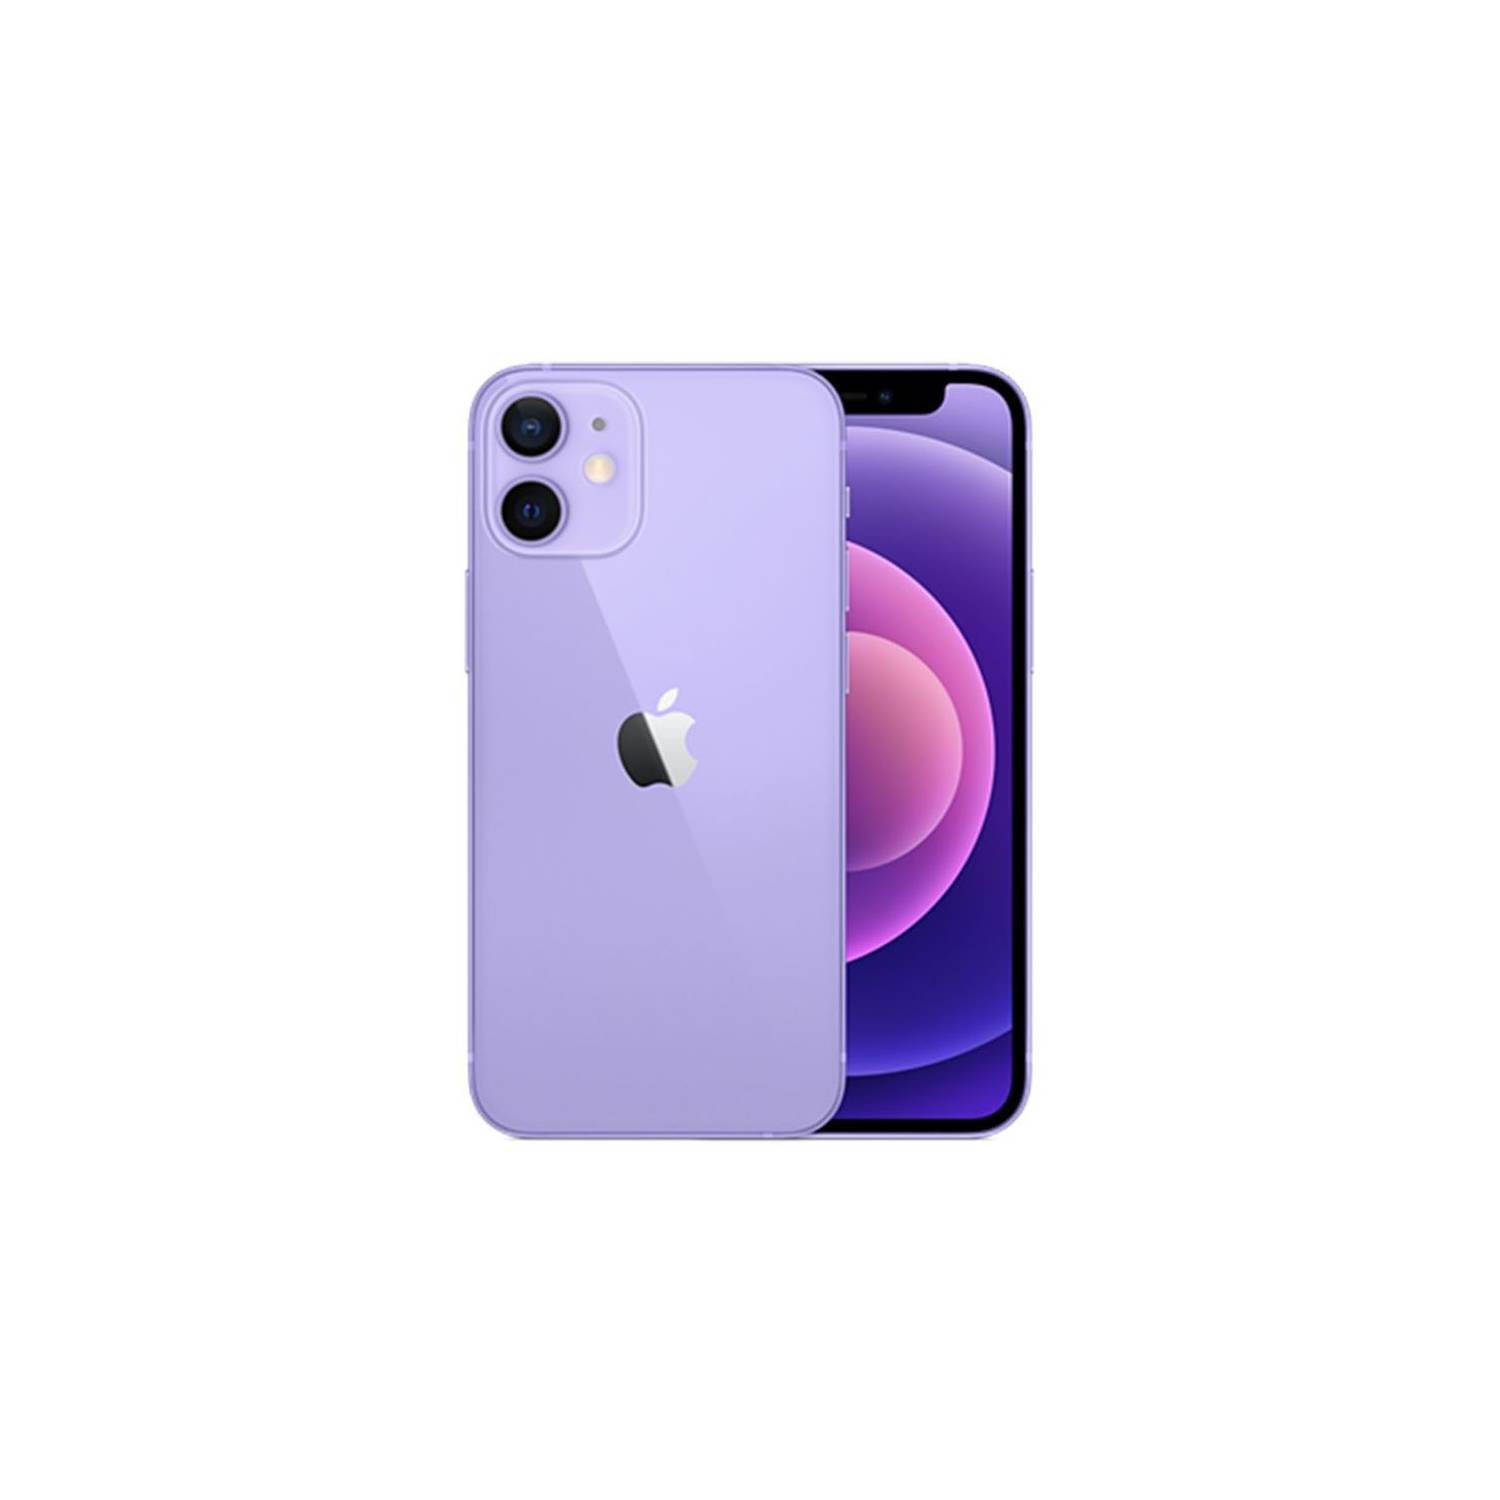 Apple – iPhone 12, 64GB, púrpura, desbloqueado (reacondicionado